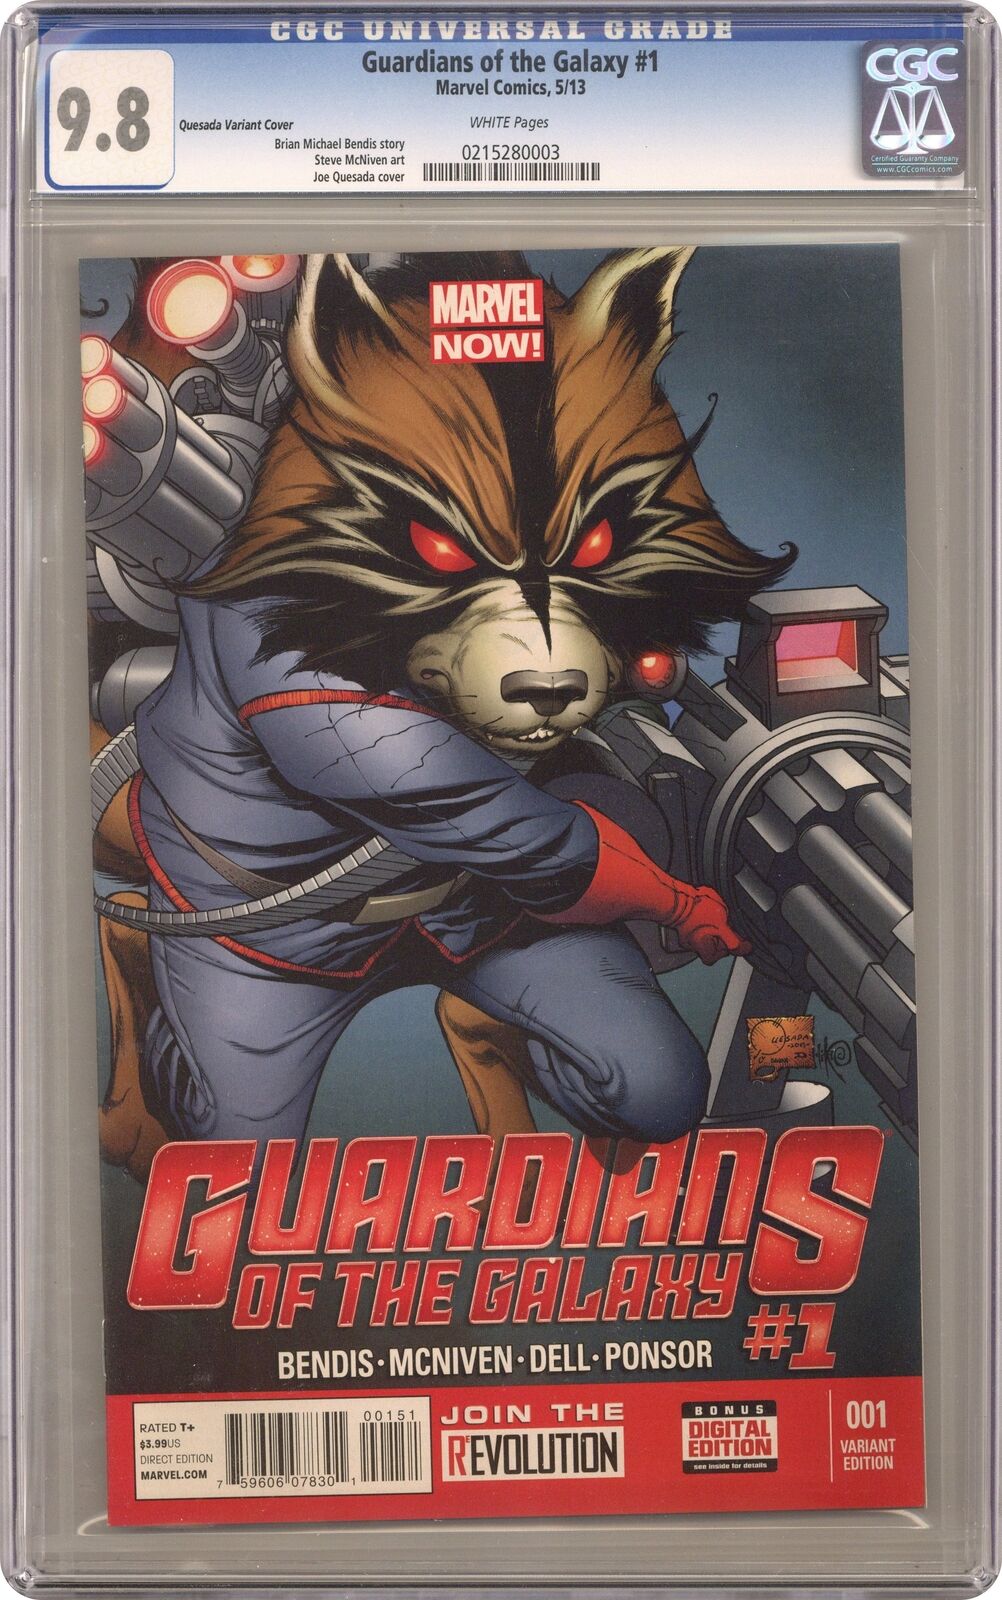 Guardians of the Galaxy 1E Quesada 1:100 Variant CGC 9.8 2013 0215280003